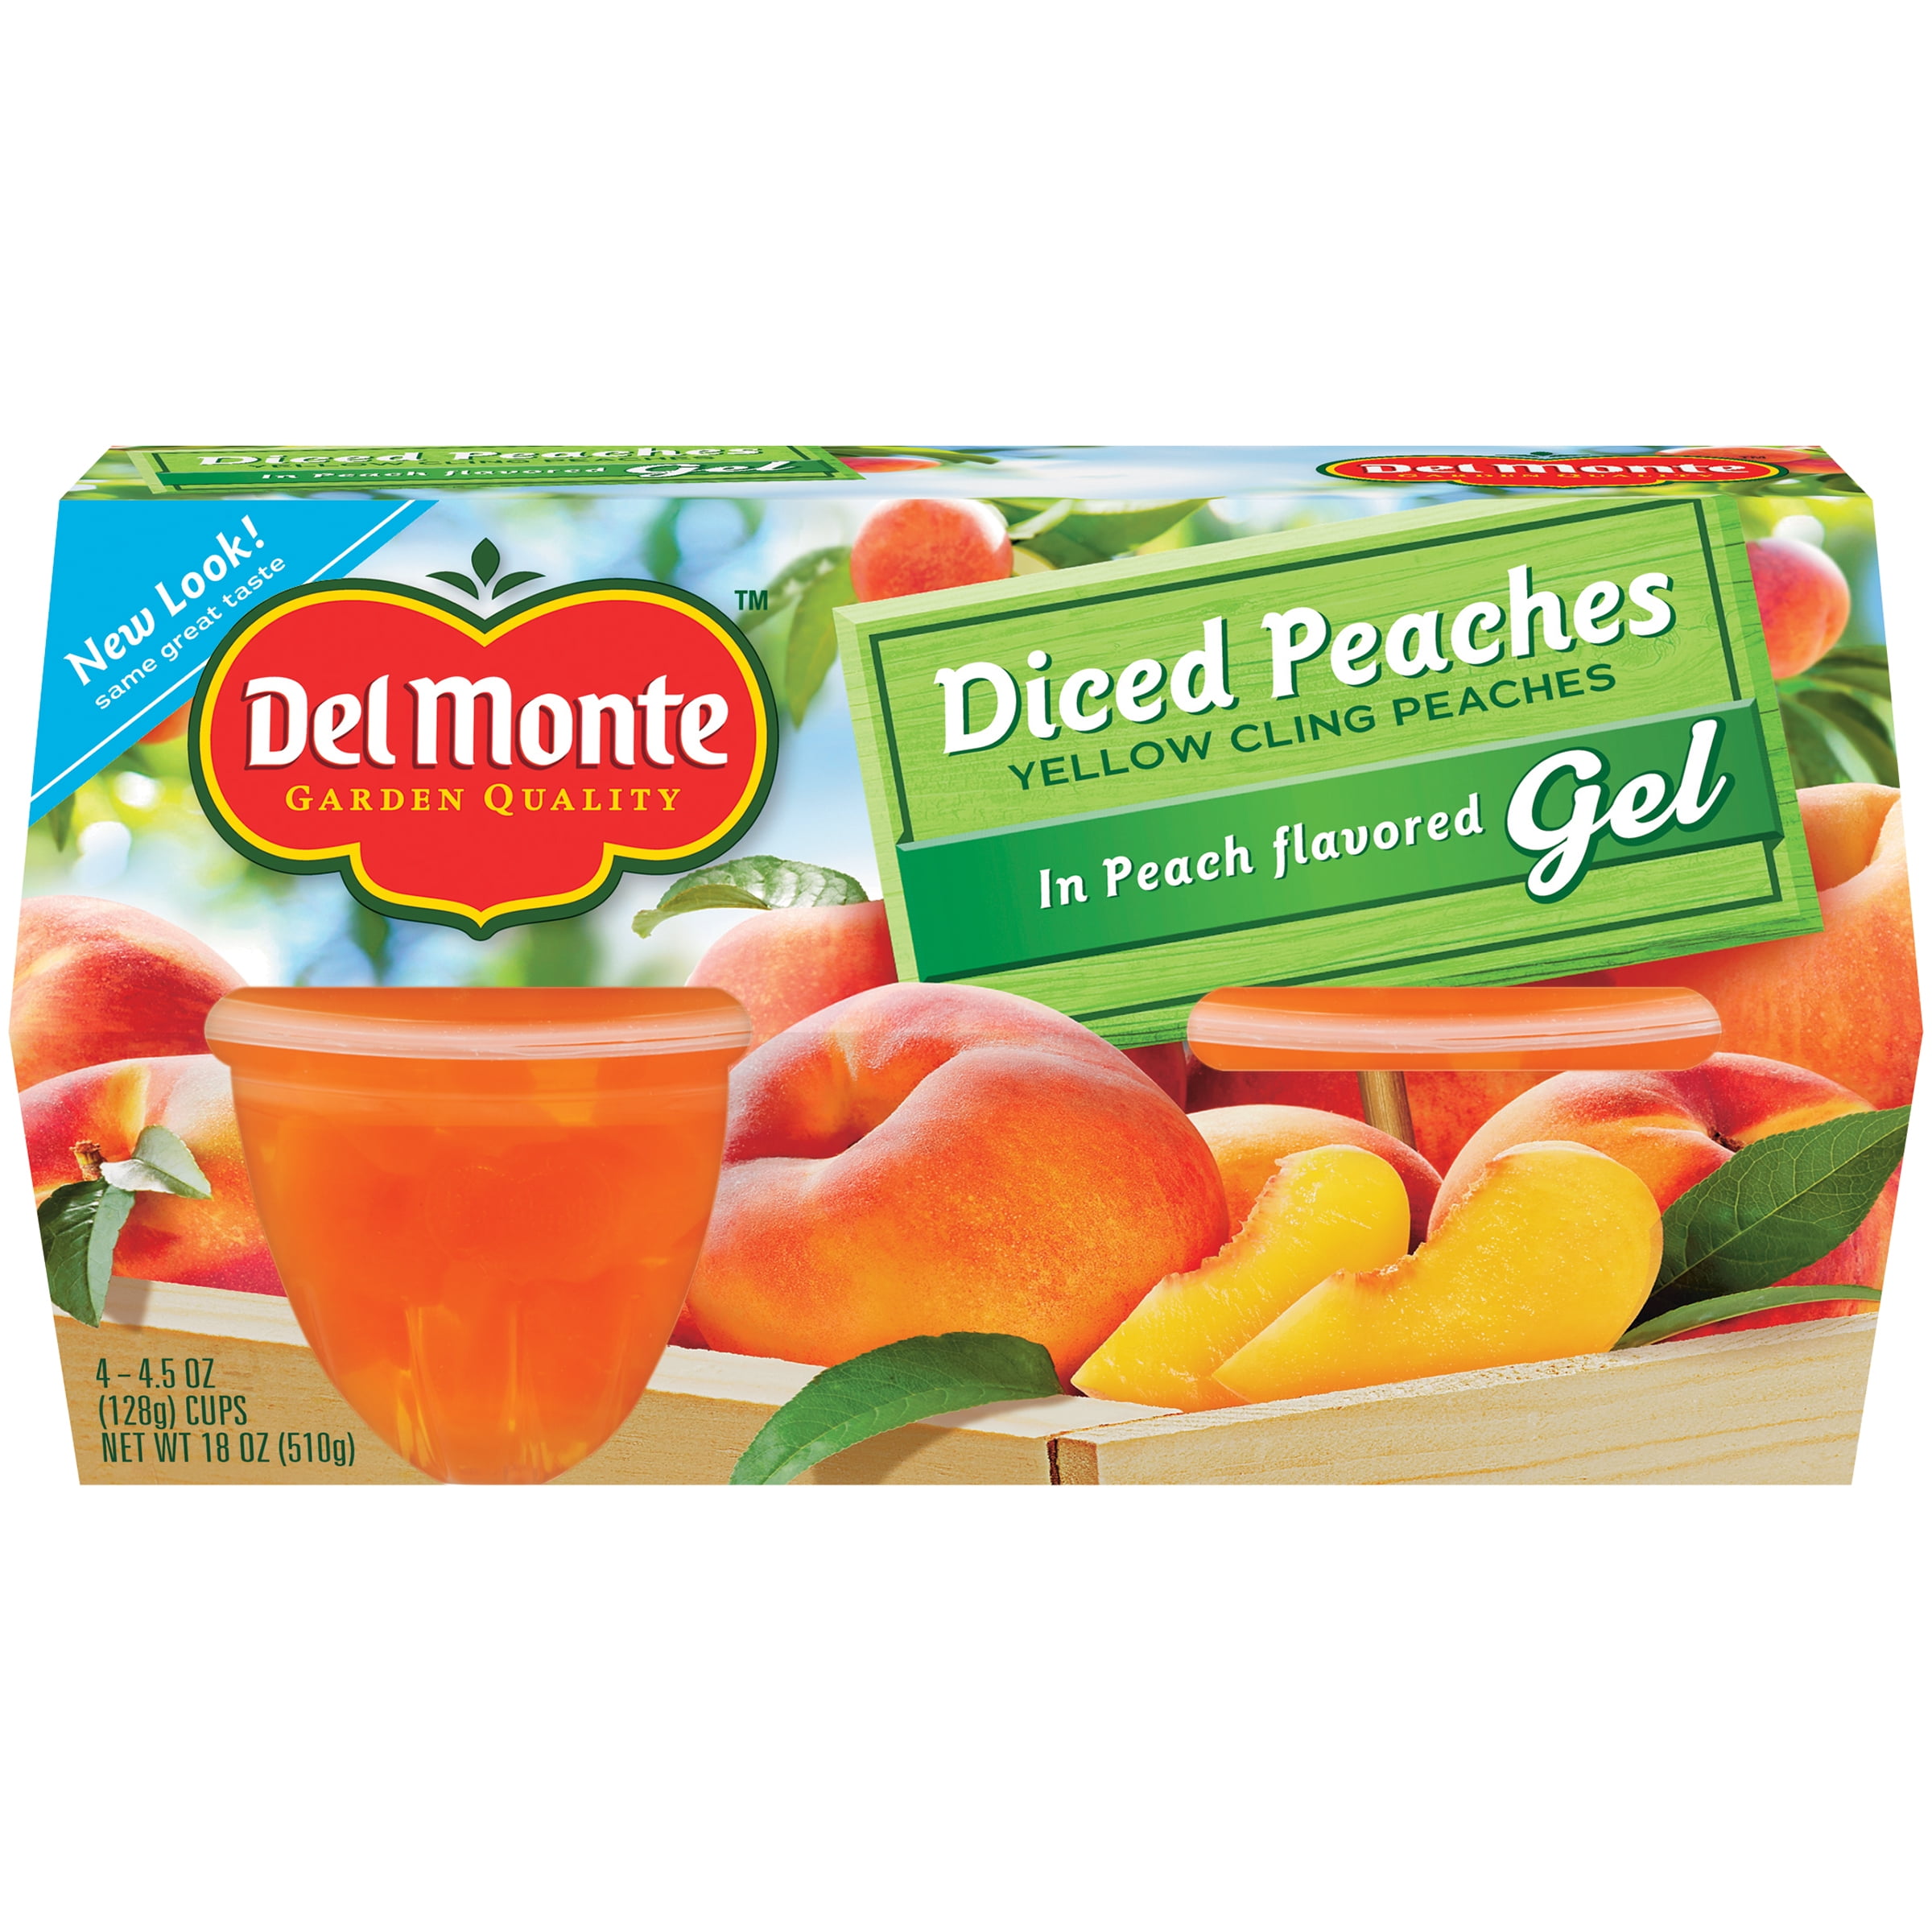 Dole Fruit in Gel Cups Variety Pack, 16 pk./4.3 oz